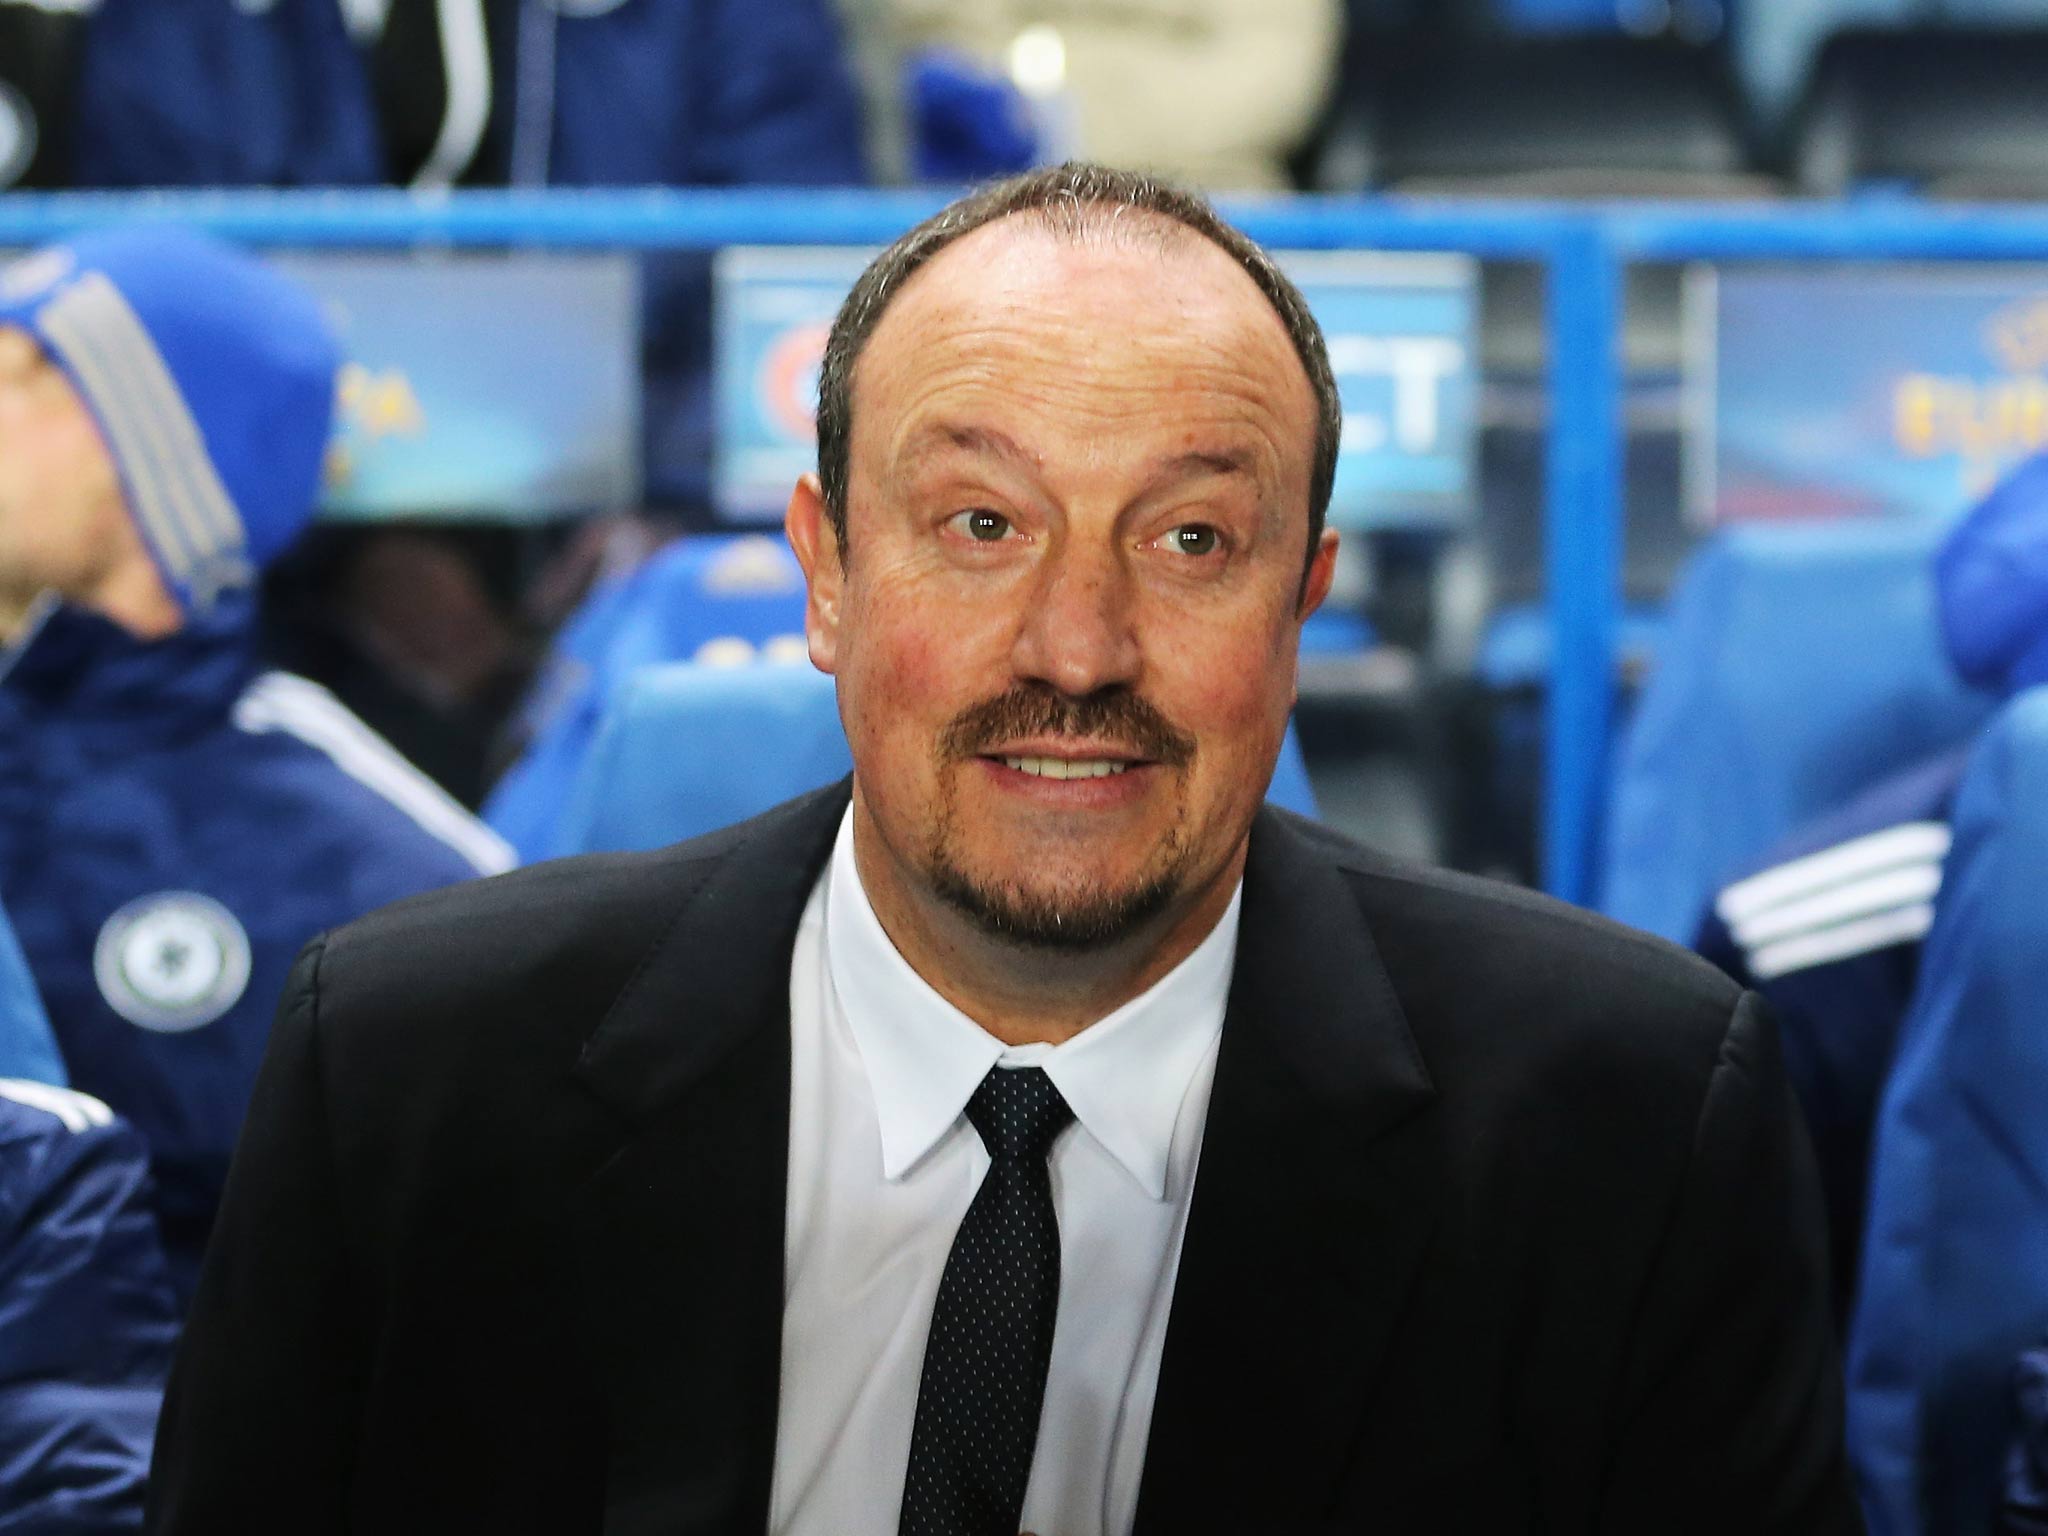 Chelsea interim manager Rafael Benitez